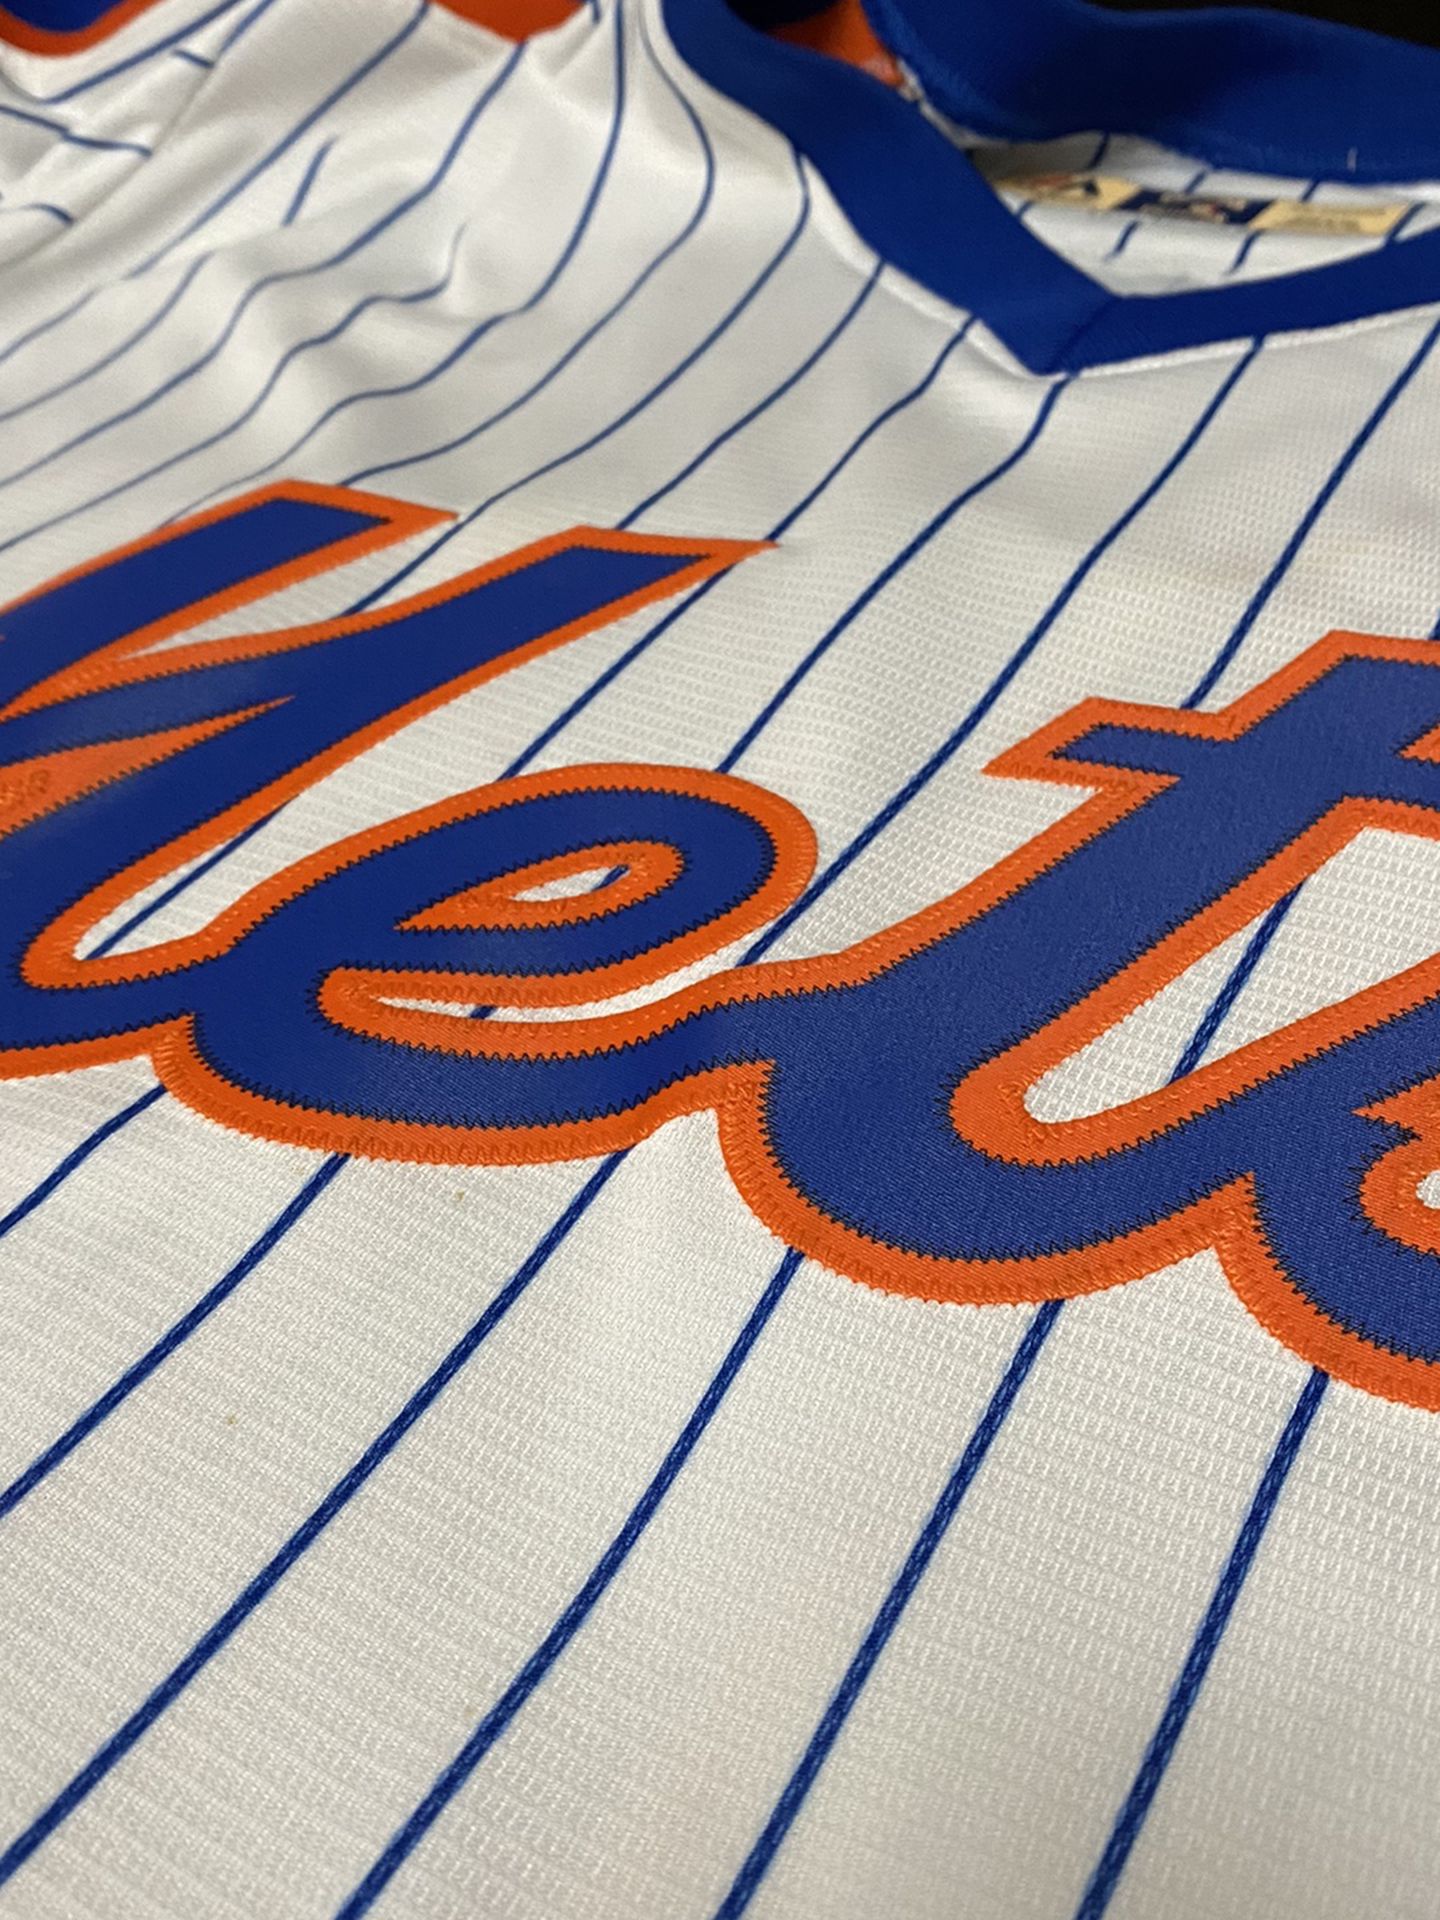 💥New York Mets “ Darryl Strawberry” Baseball Pullover Jersey XXL💥